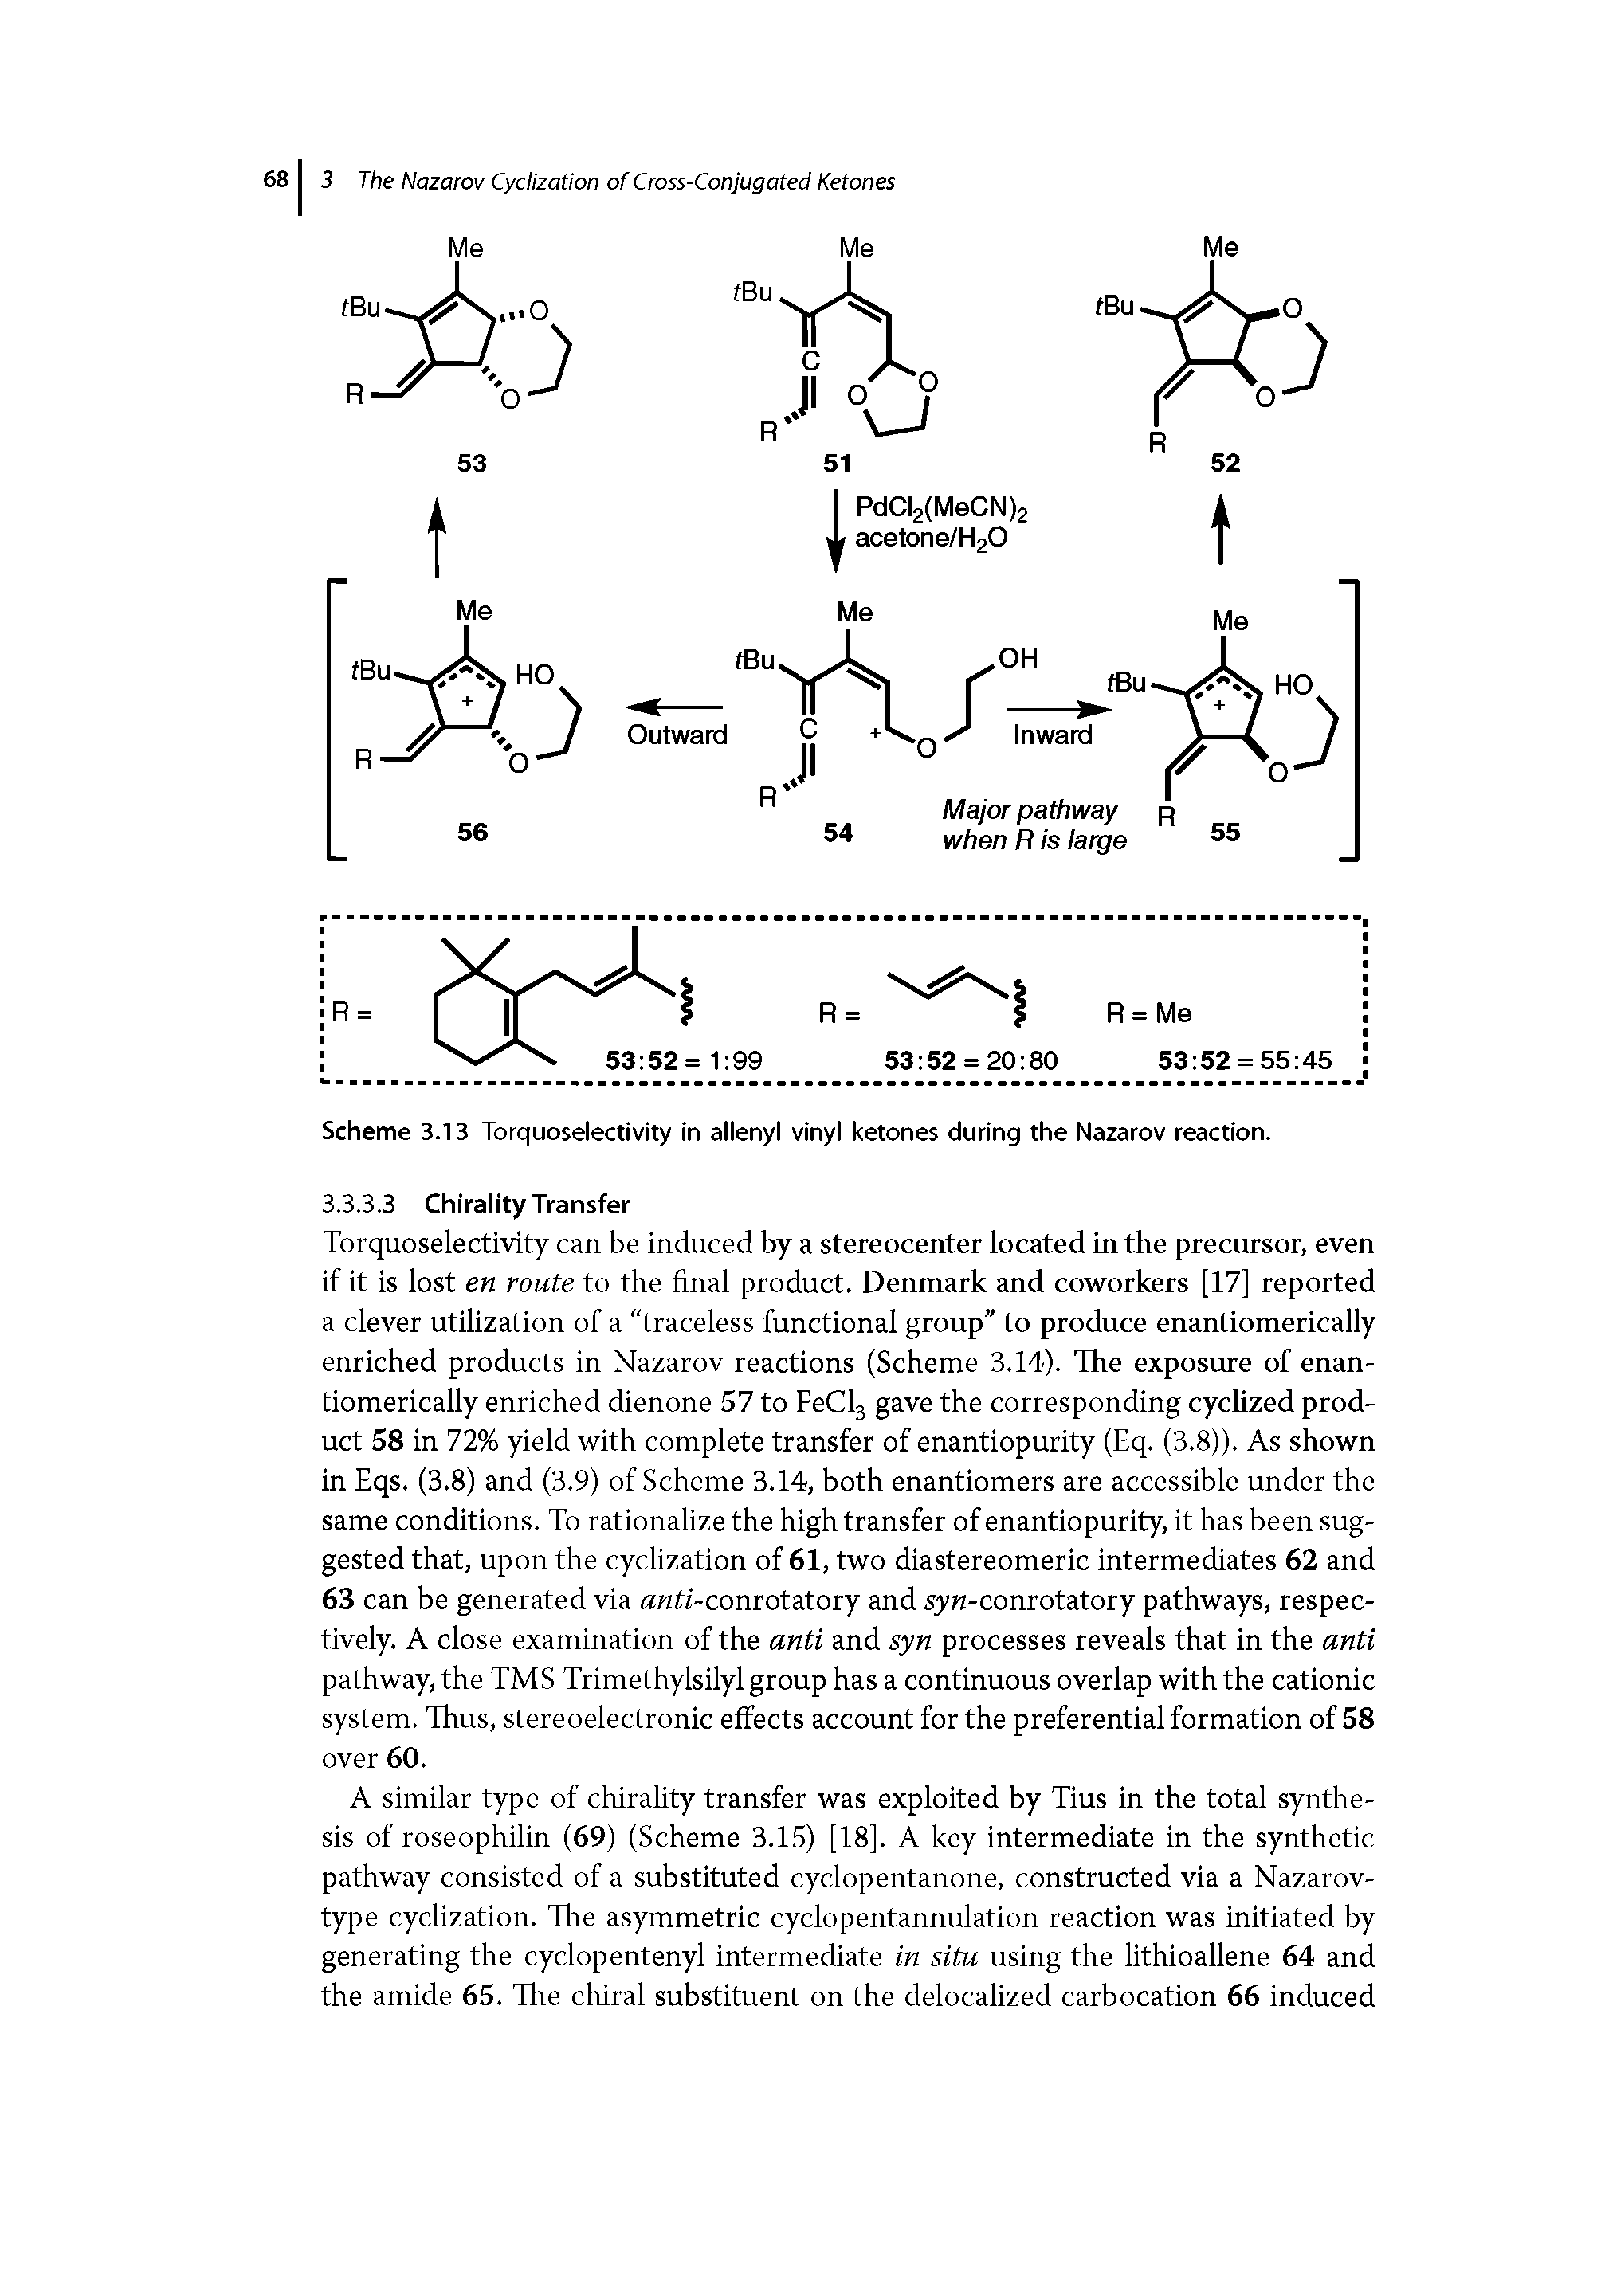 Scheme 3.13 Torquoselectivity in allenyl vinyl ketones during the Nazarov reaction.